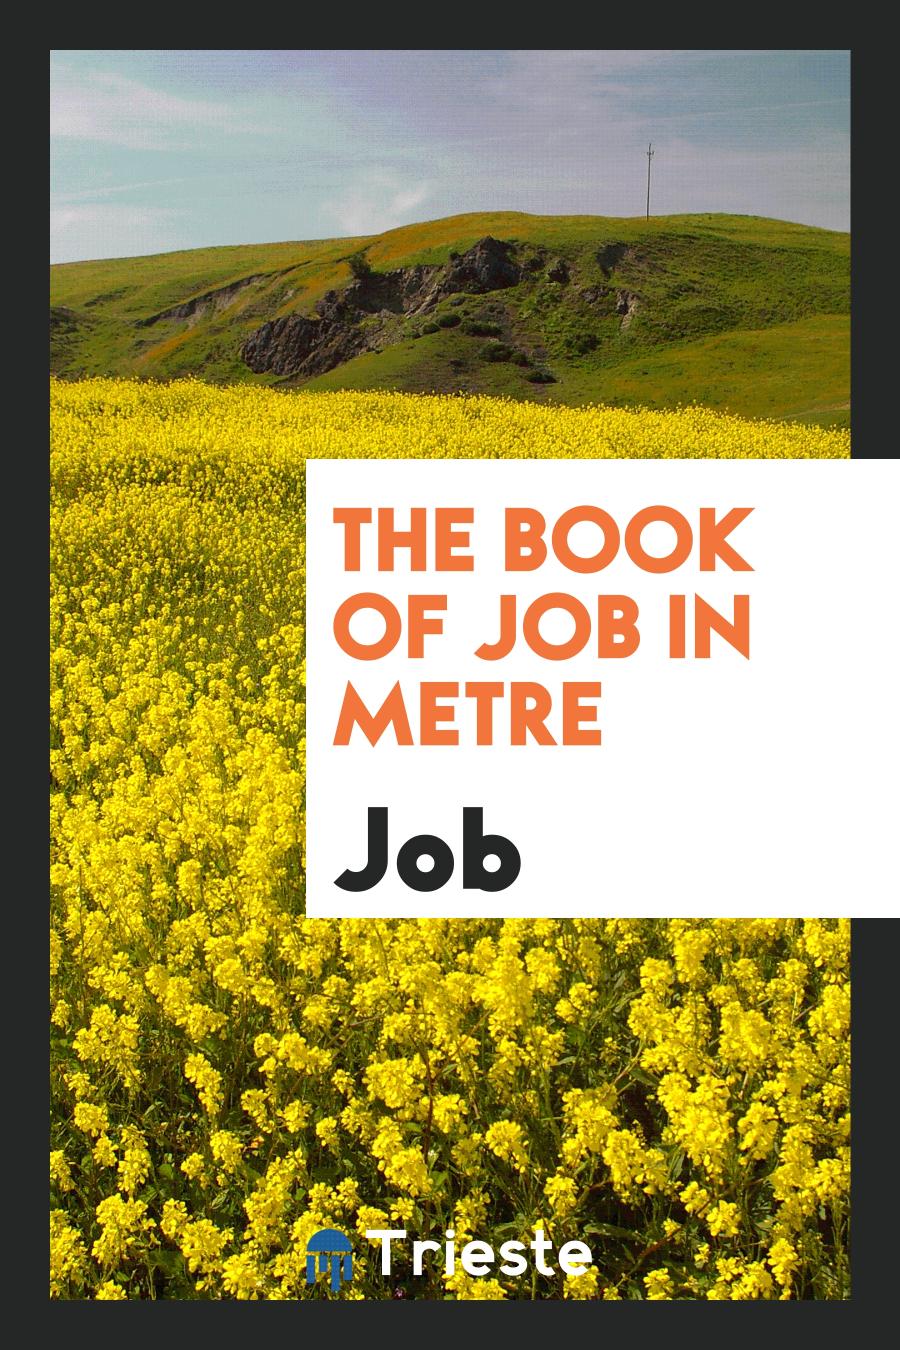 The Book of Job in Metre